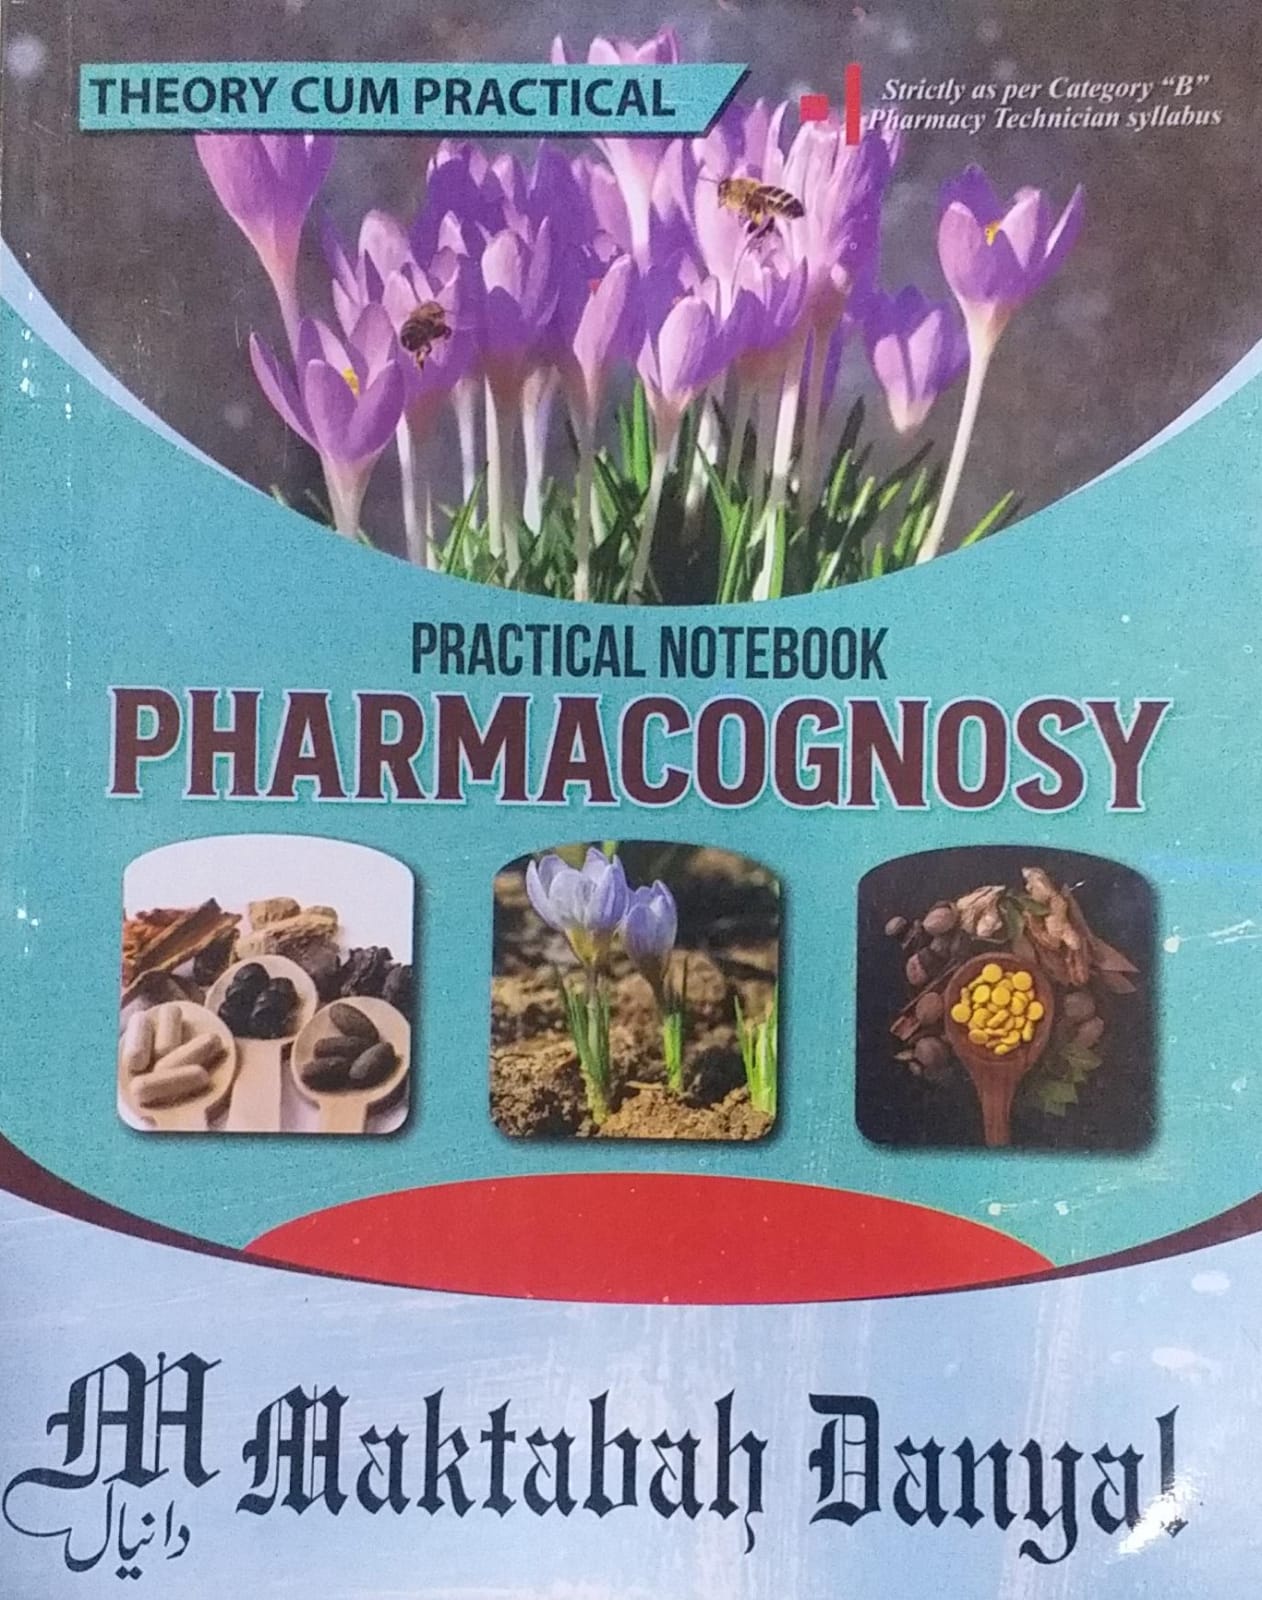 PRACTICAL NOTEBOOK PHARMACOGNOSY, 1st year